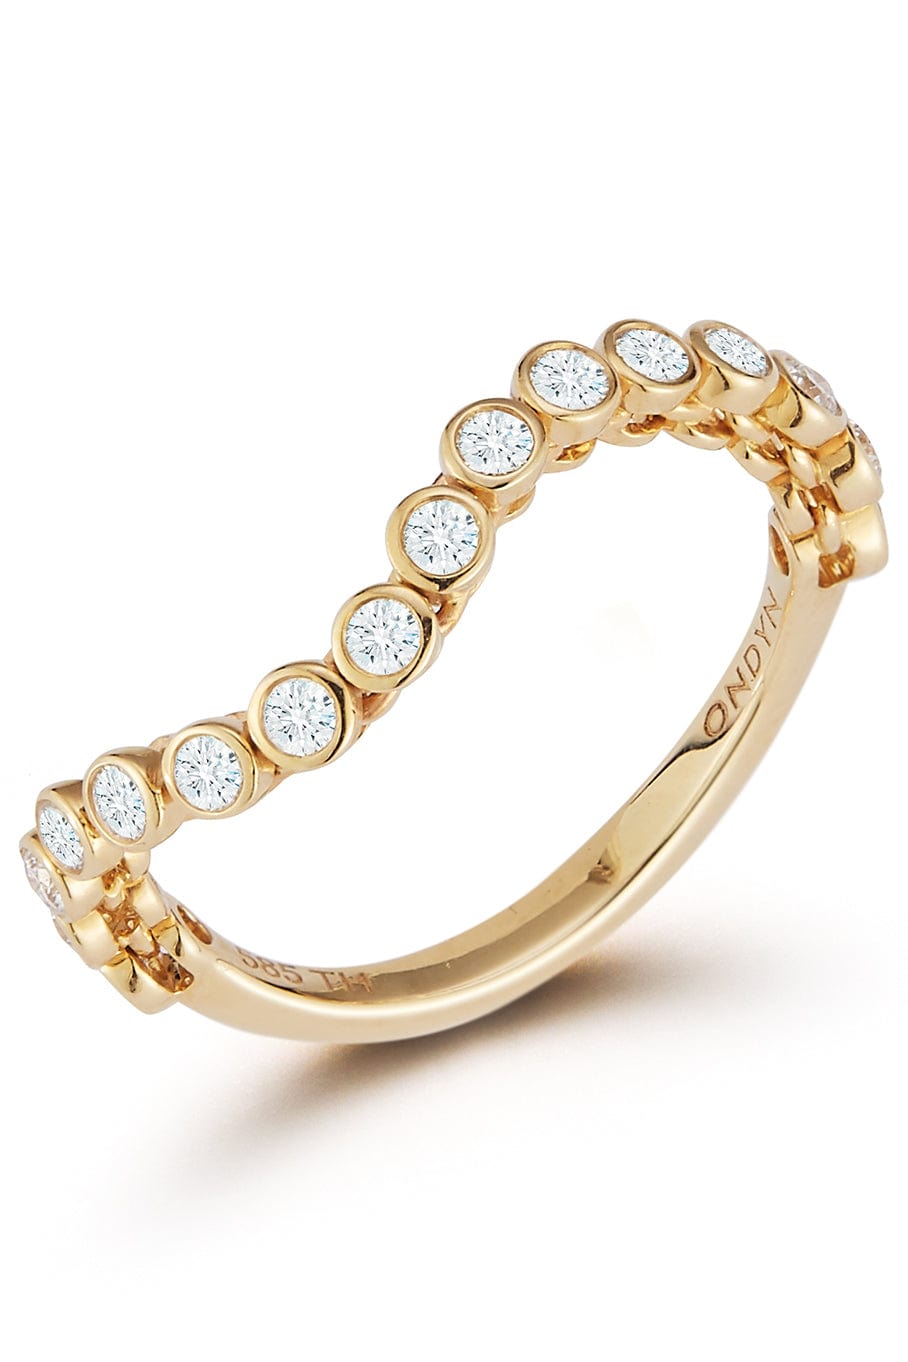 ONDYN-Skinny Capri Diamond Ring-YELLOW GOLD